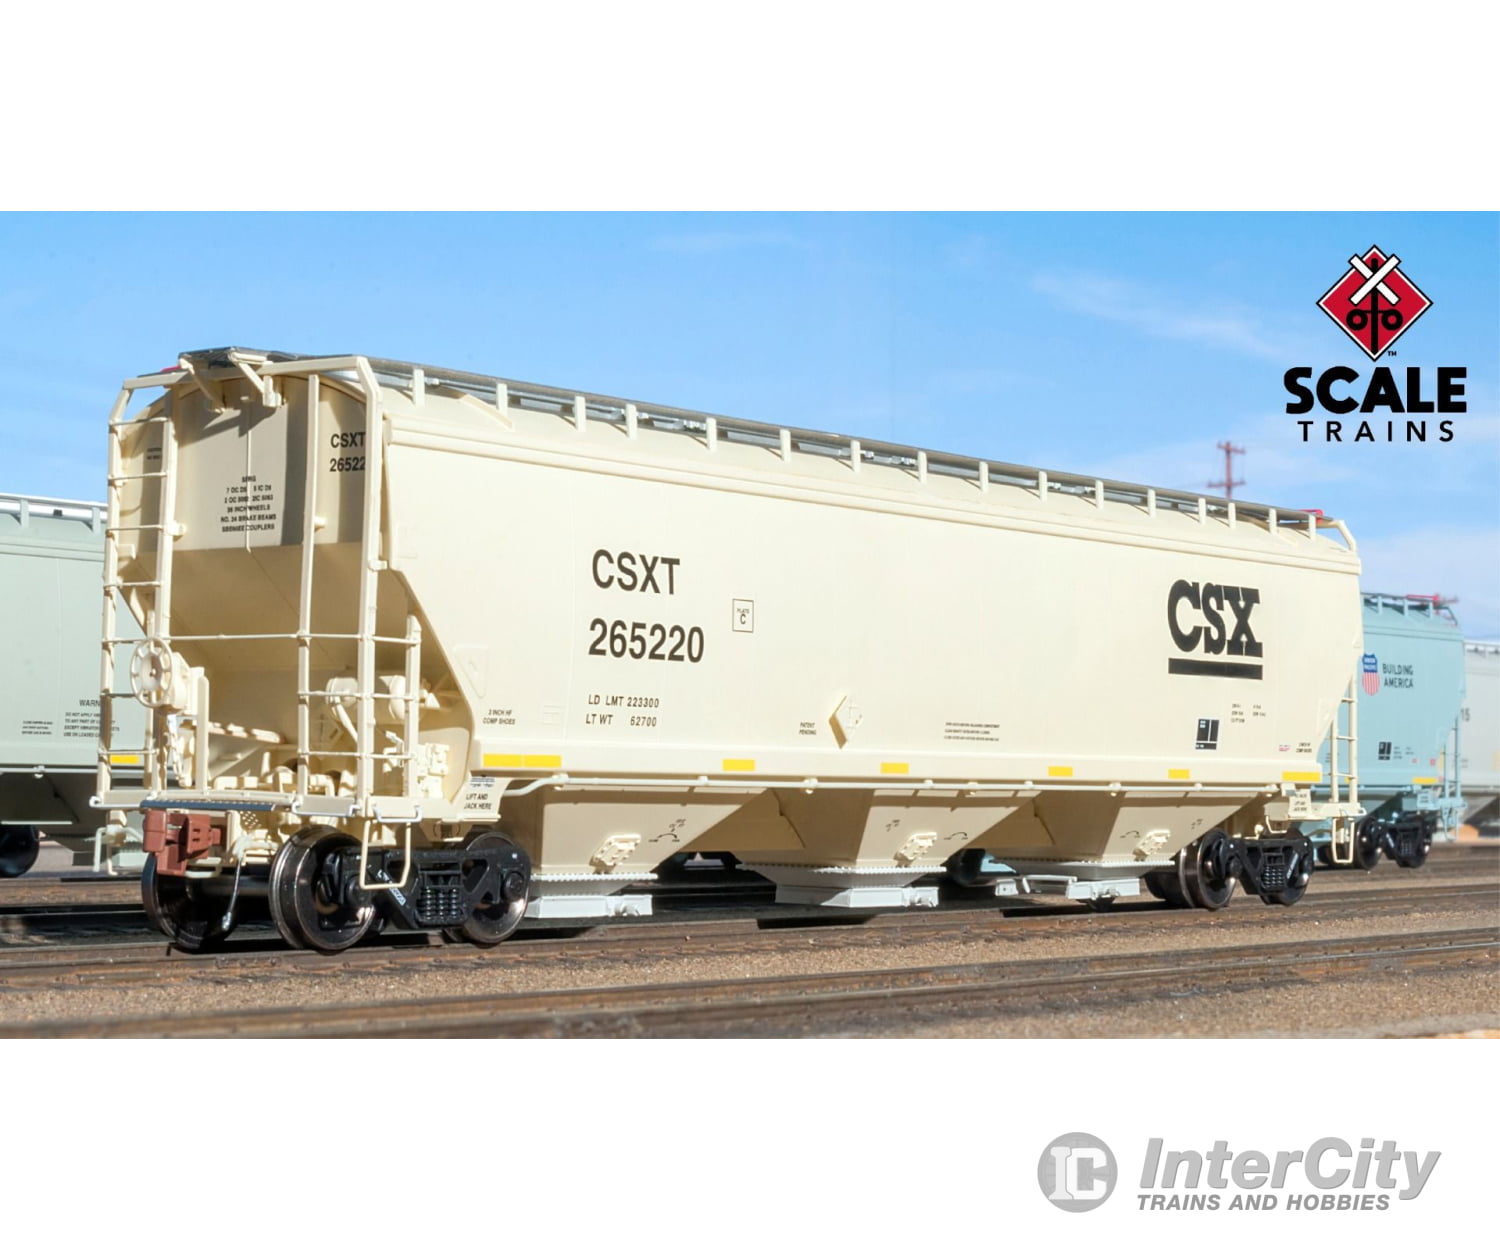 Scale Trains Sxt30805 Rivet Counter Ho Gunderson Covered Hopper Csx Rd#265220 Freight Cars